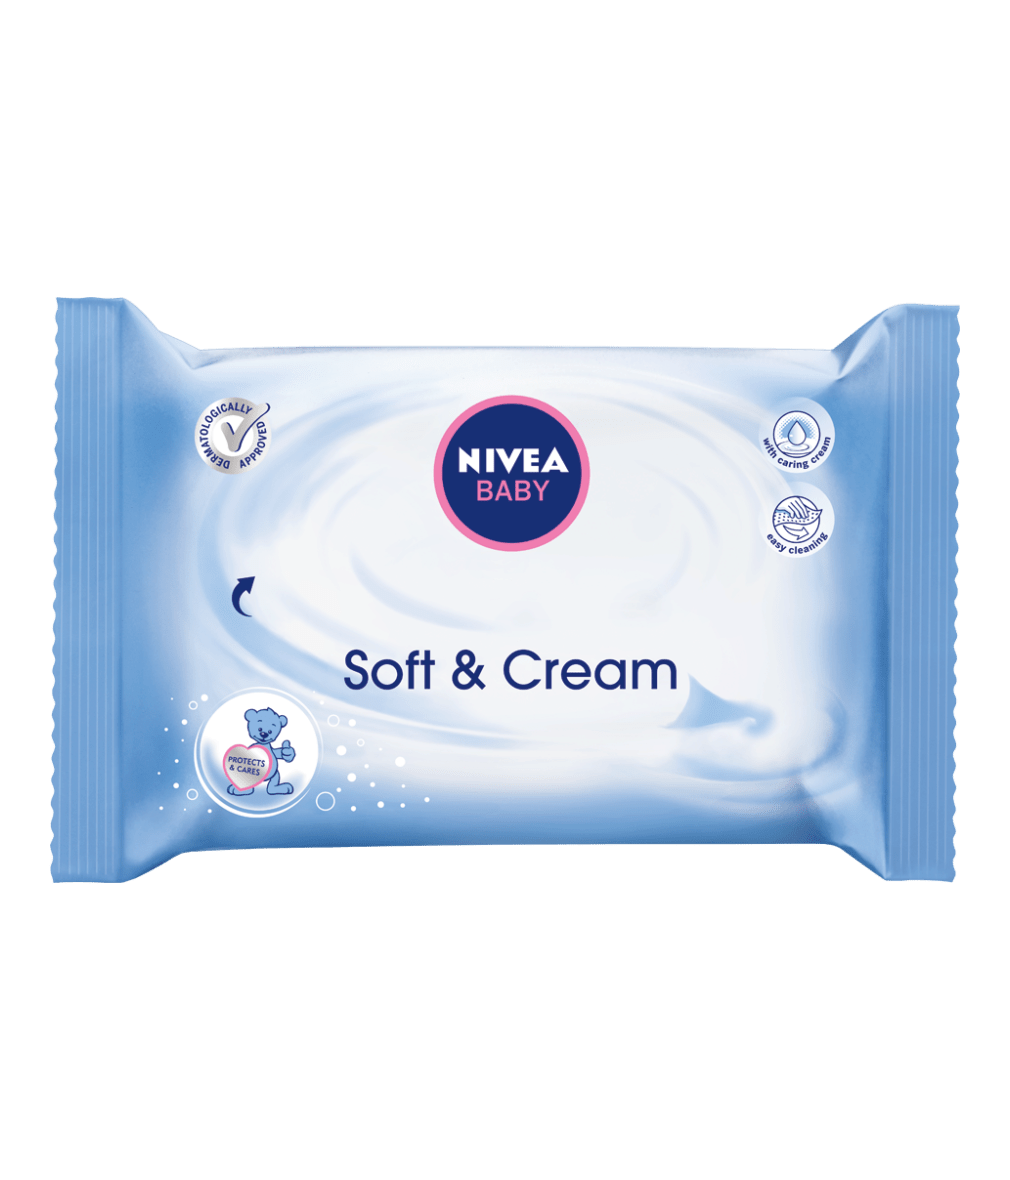 NIVEA BABY Lingettes Soft & Cream Refill 63ST